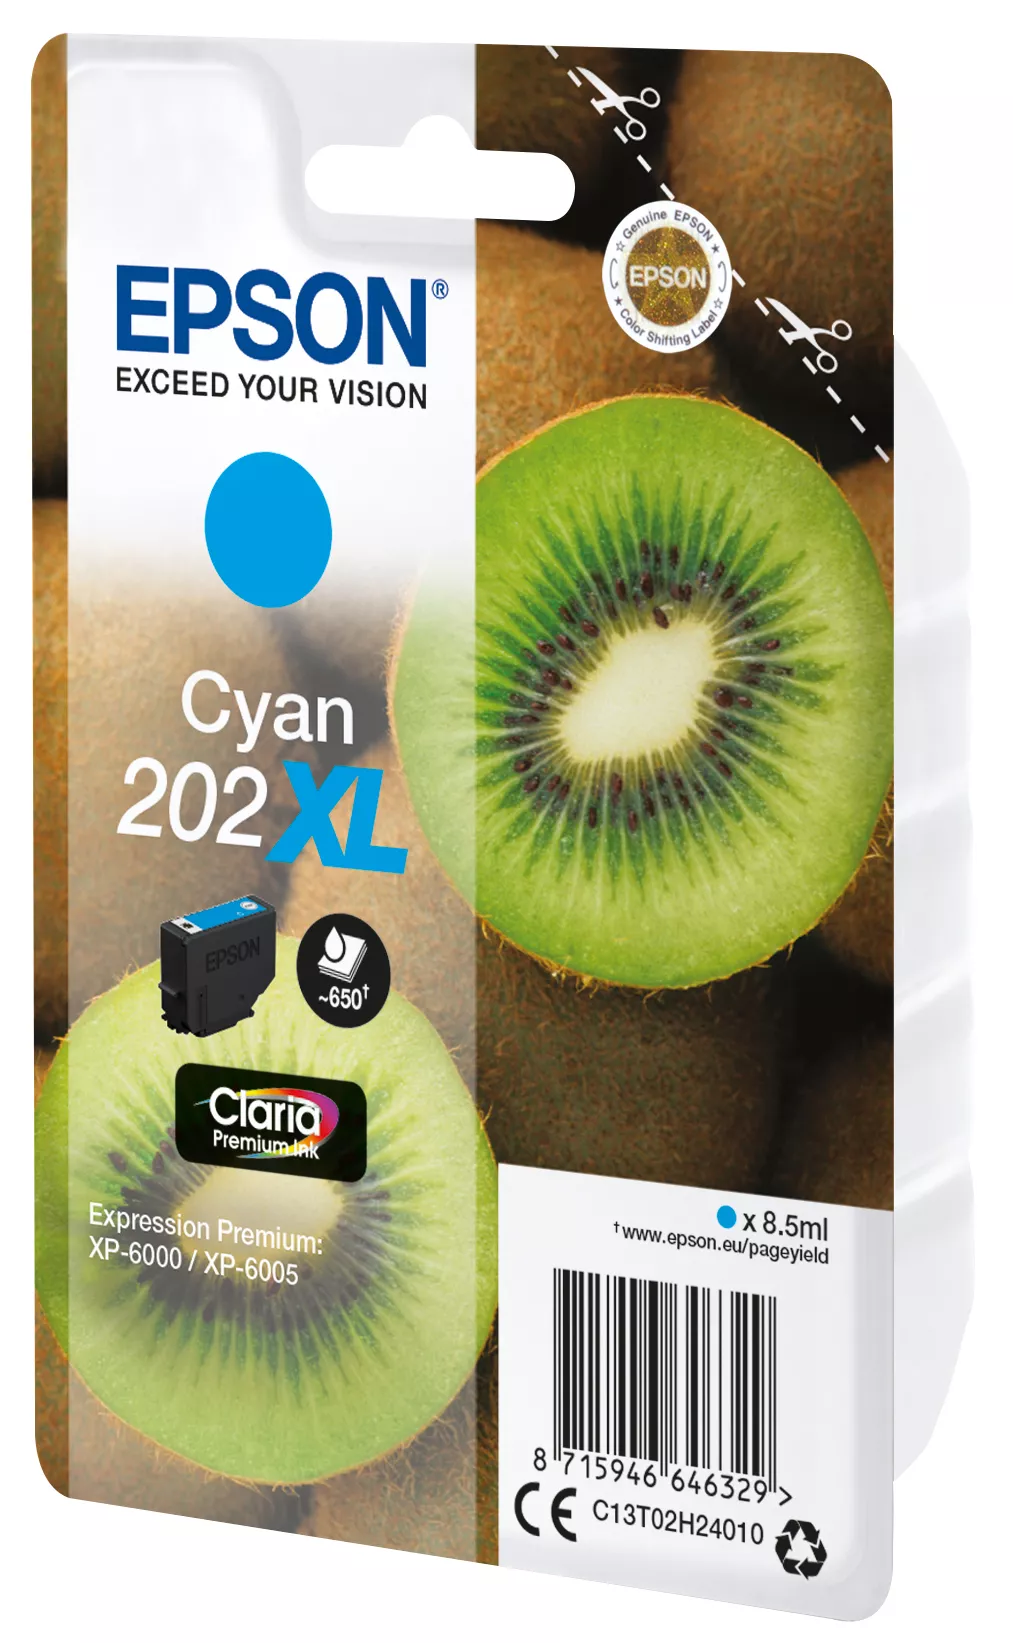 Achat EPSON Encre Claria Premium - Cartouche Kiwi 202 Cyan (XL au meilleur prix